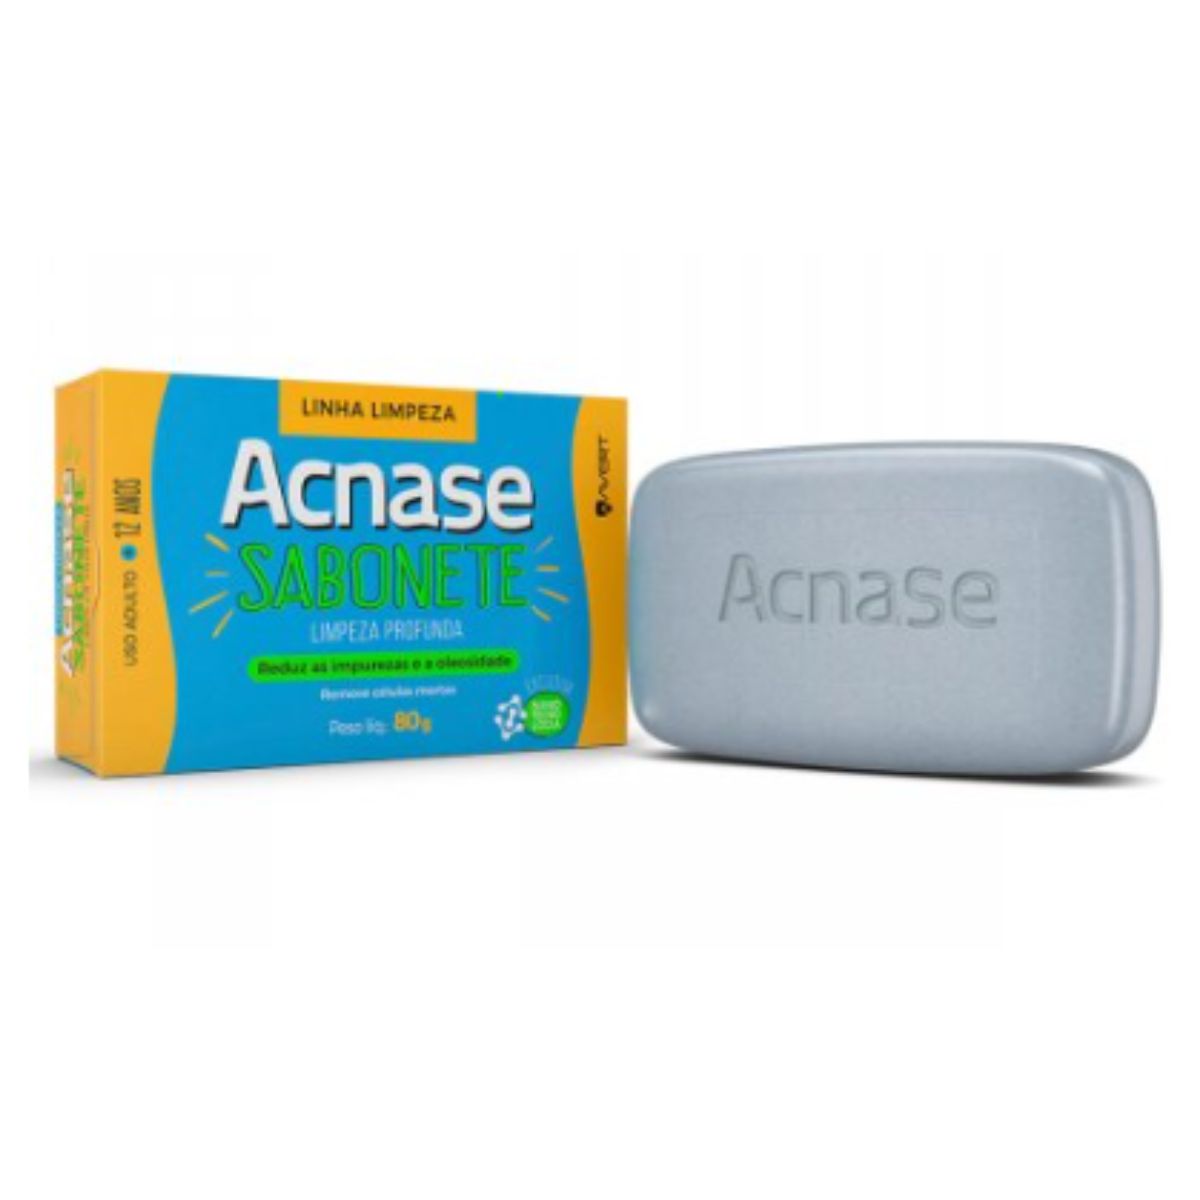 acnase-clean-sab-limpeza-prof-1.jpg